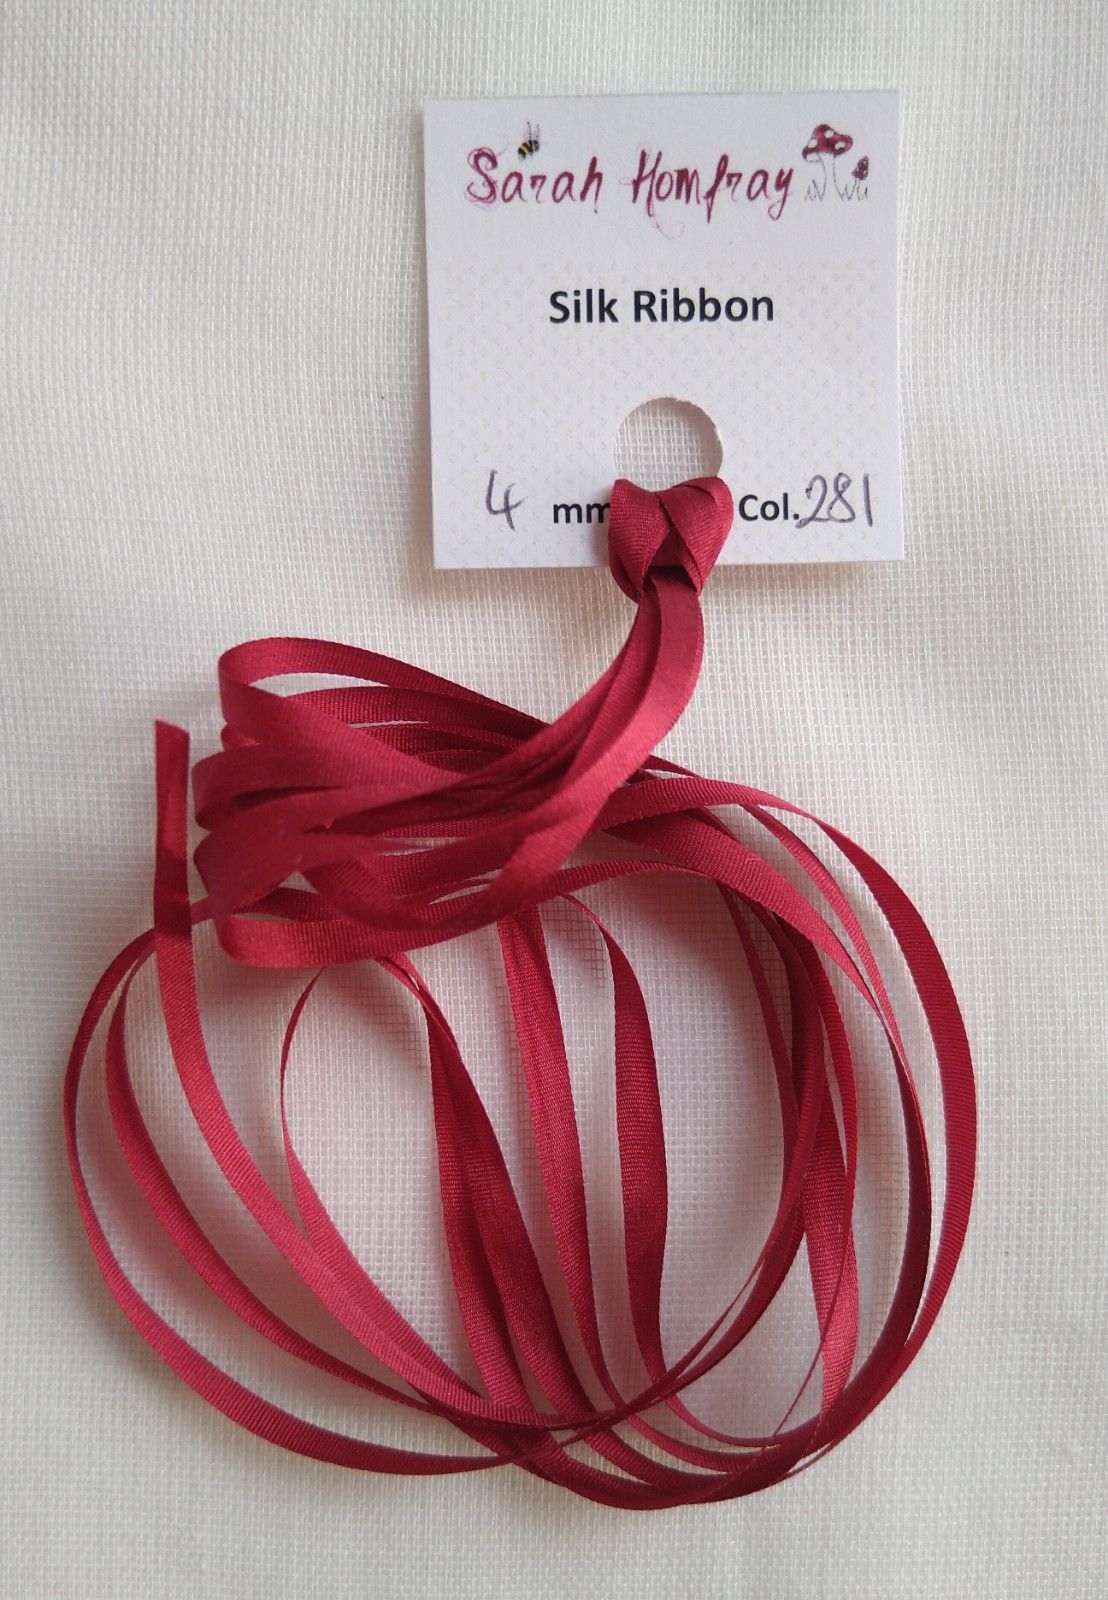 4mm Dark red 281 silk ribbon